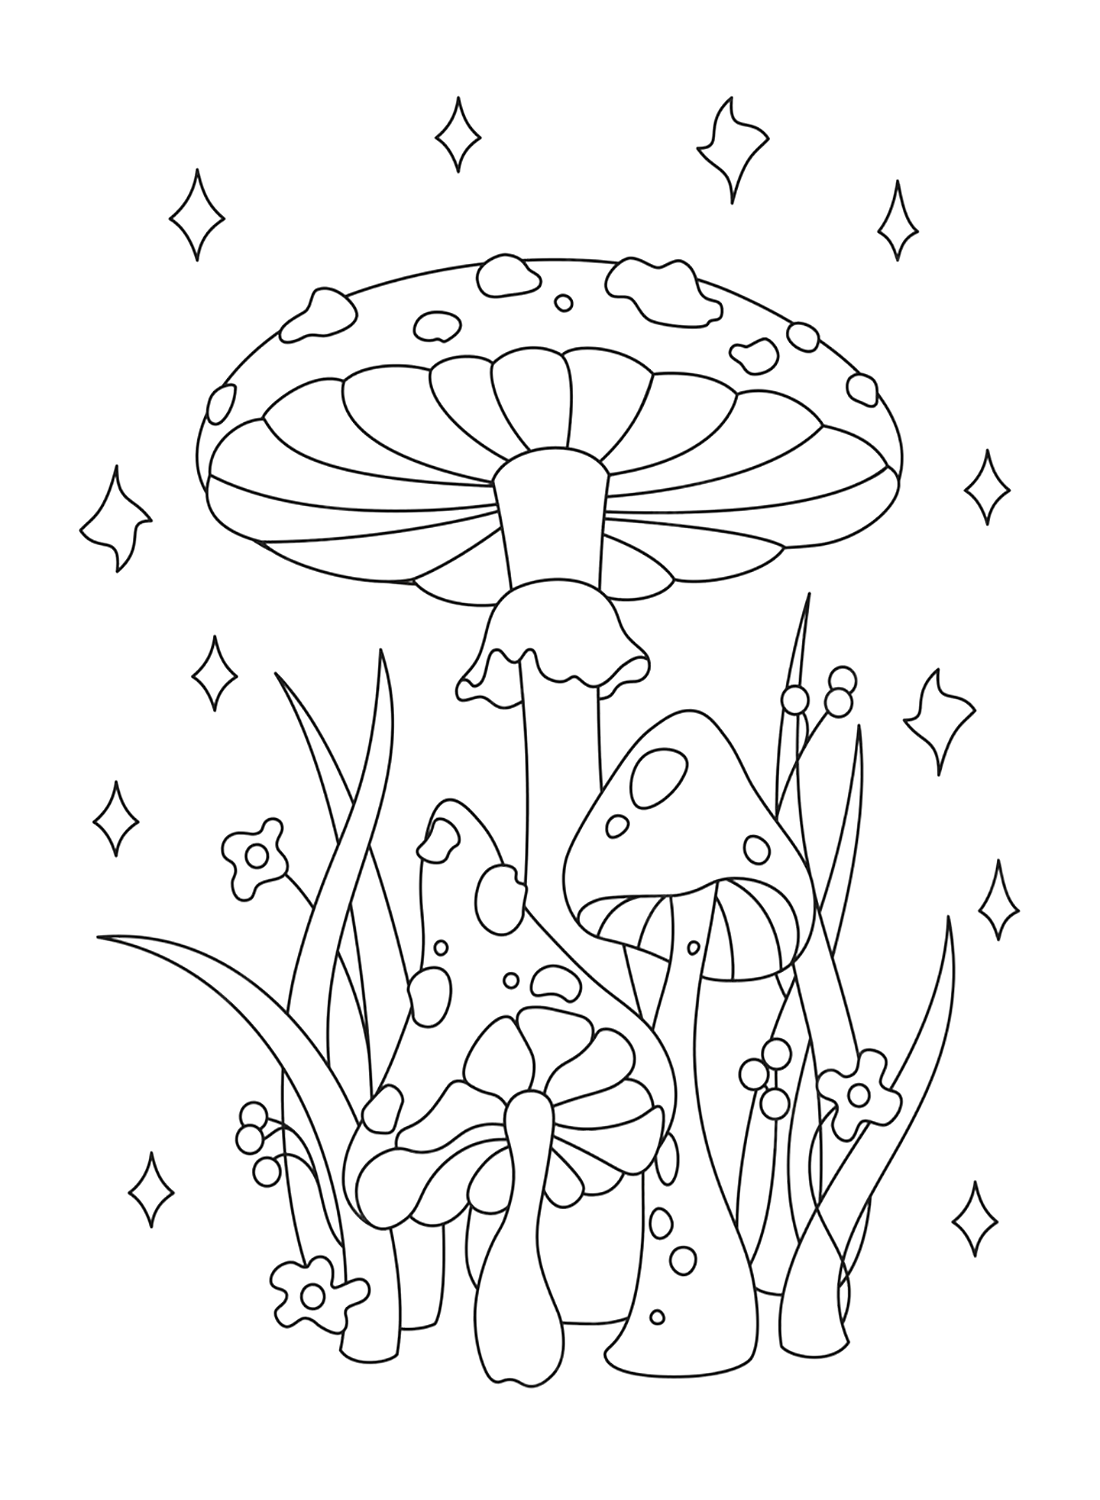 Mushroom Coloring Page Free from Mushroom